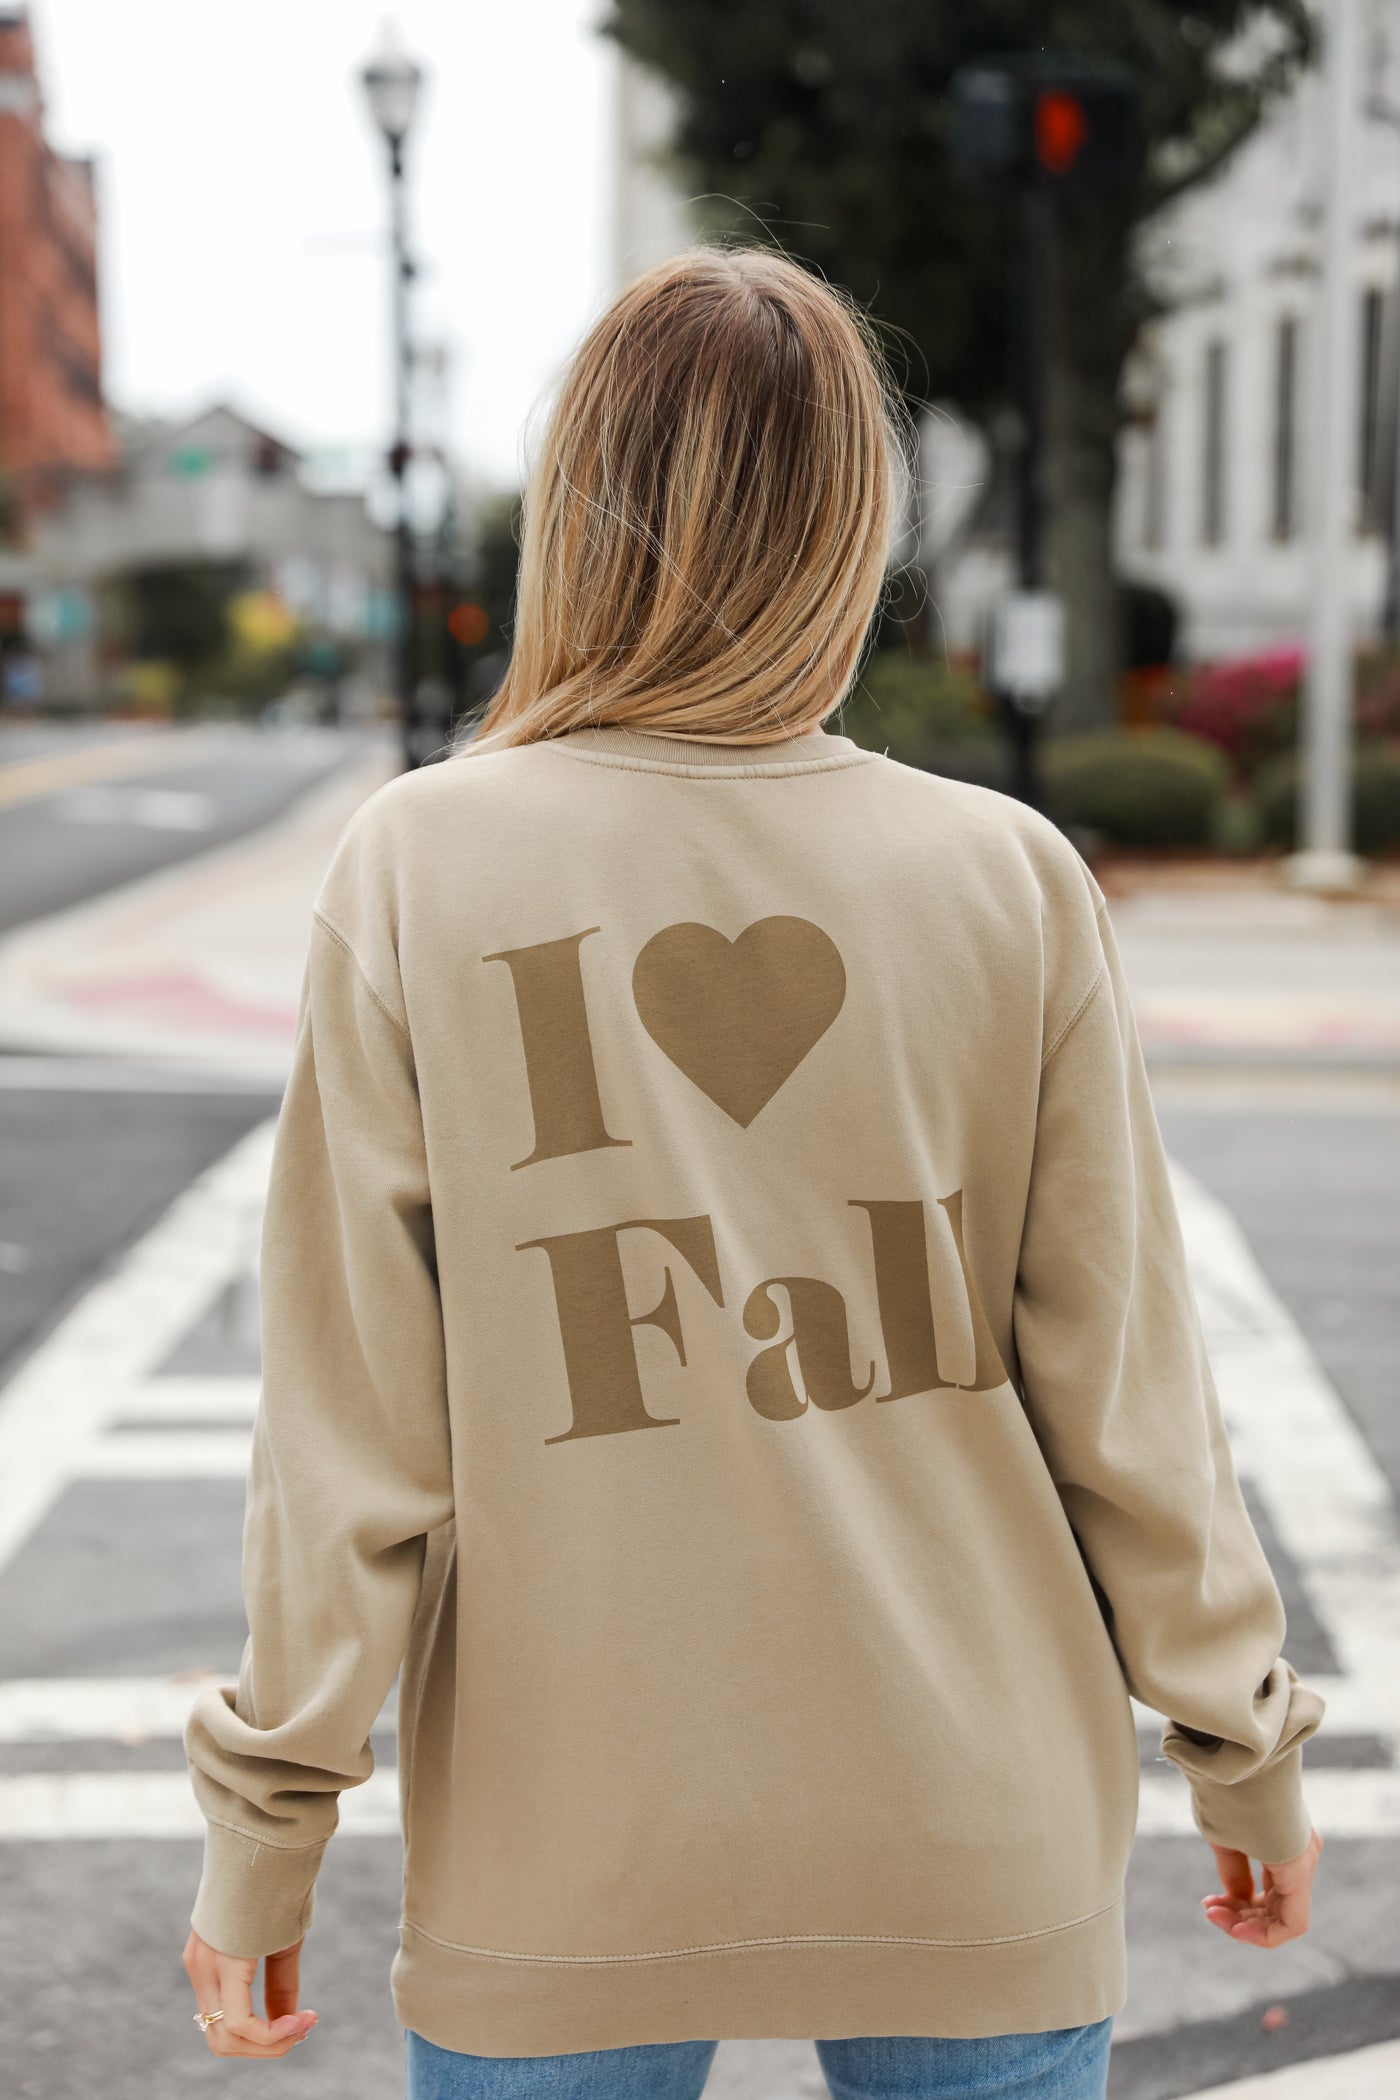 Tan I Love Fall Sweatshirt for Fall 